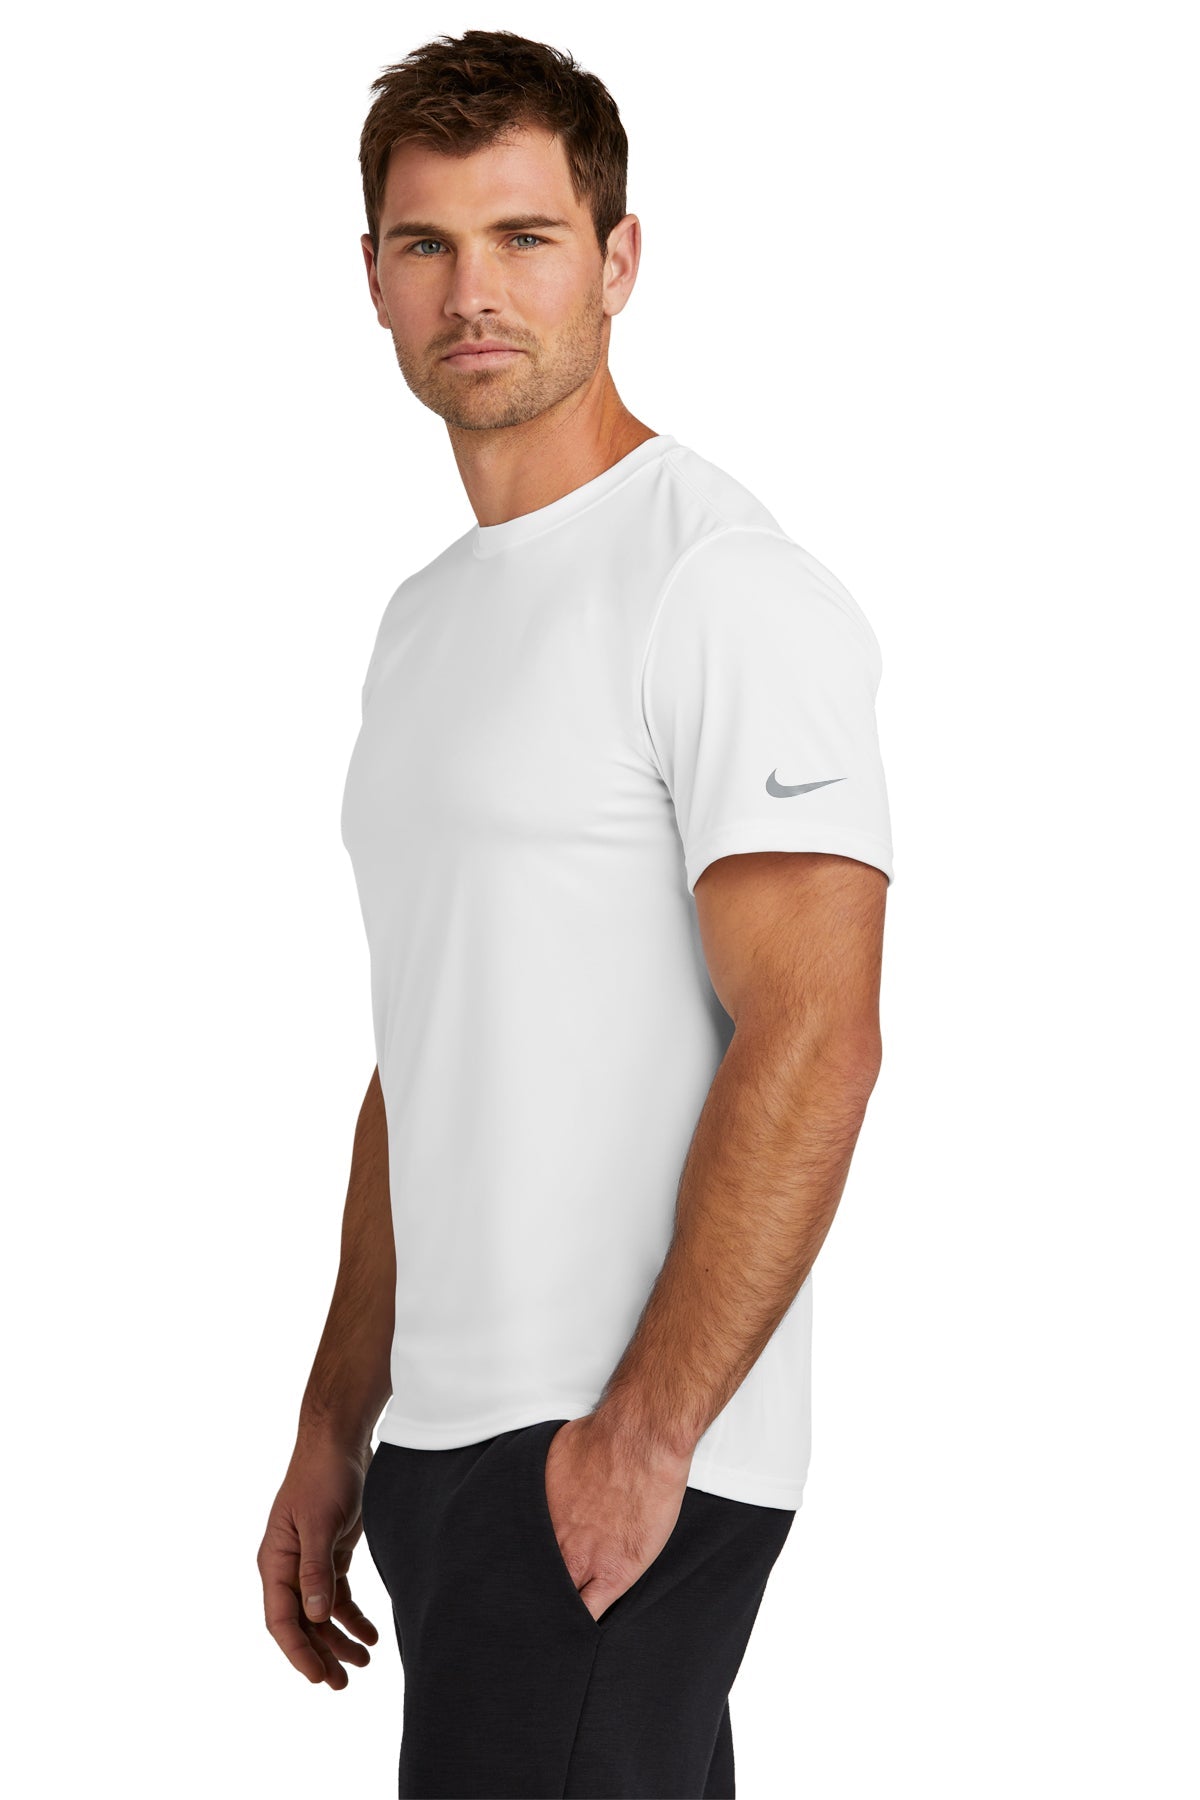 Nike Swoosh Sleeve rLegend Customized Tee's, White